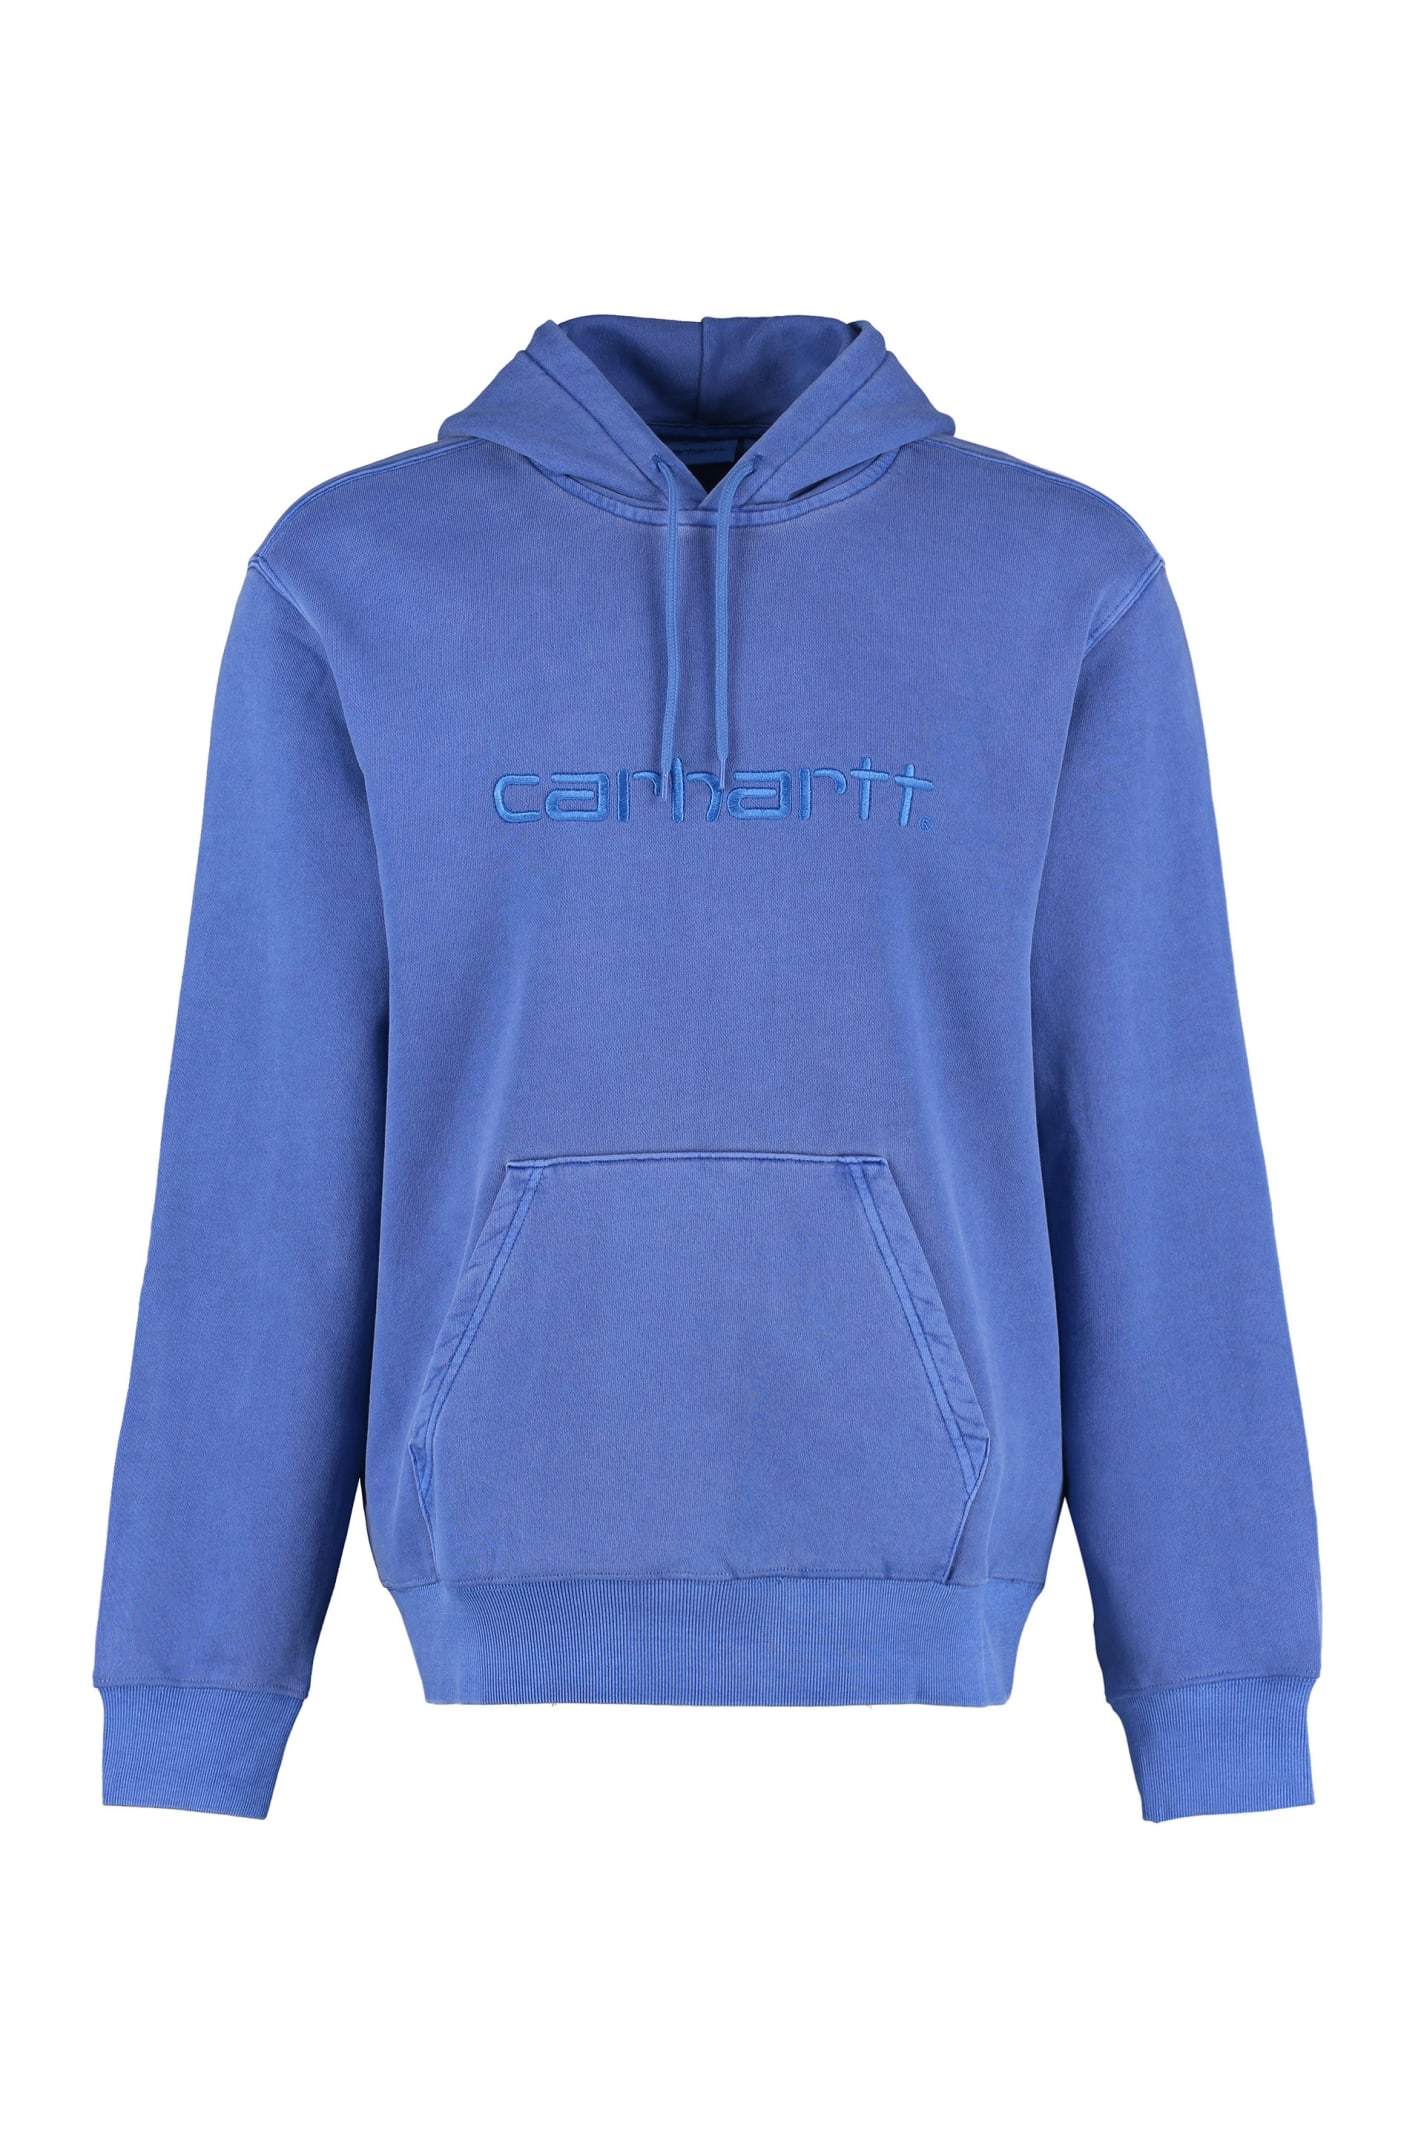 Carhartt Duster Logo Embroidered Cotton Sweatshirt